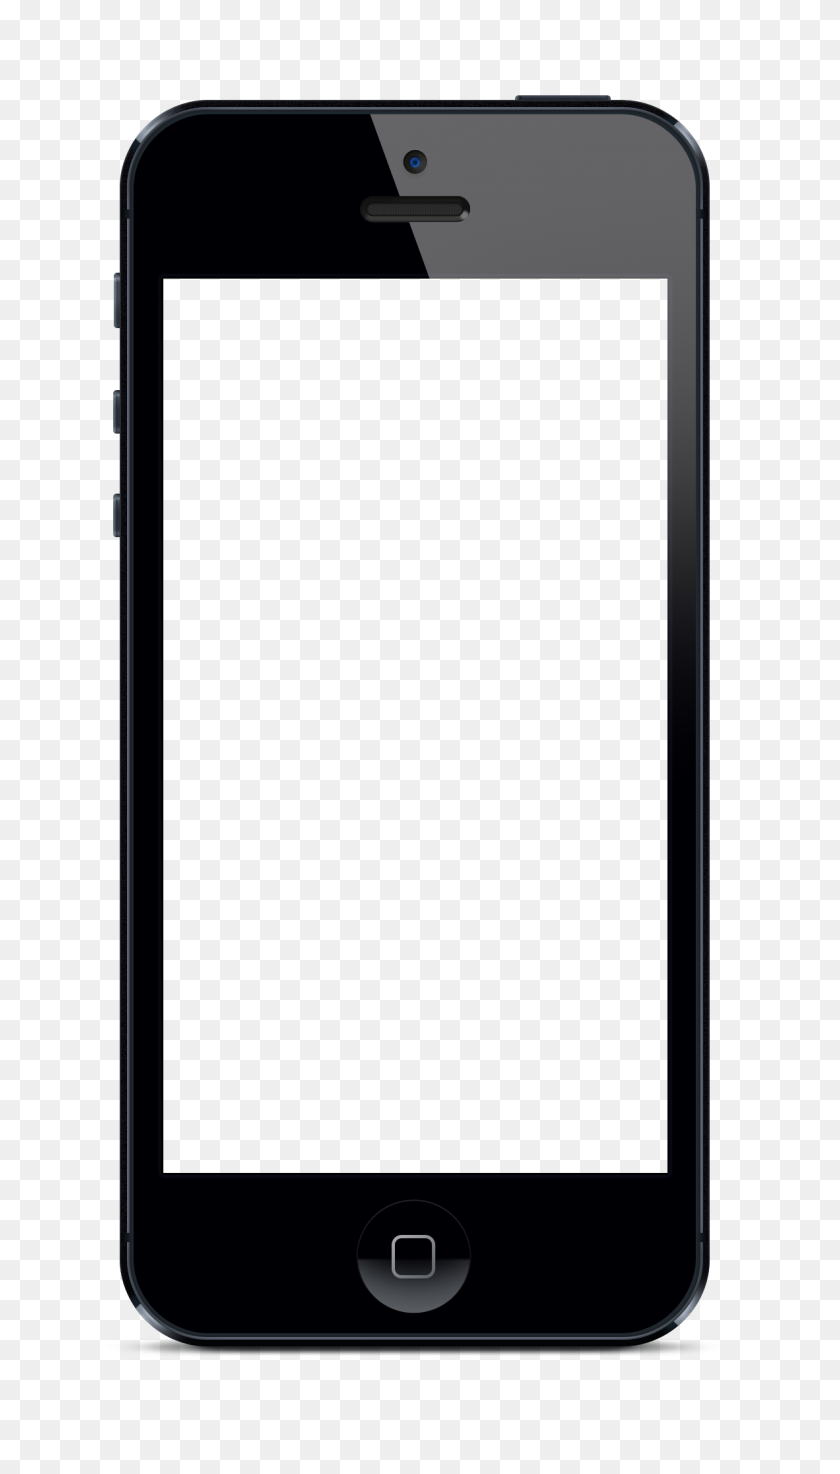 1182x2144 Iphone Png Черно-Белый Прозрачный Iphone Черный И Белый - Черный Iphone Png